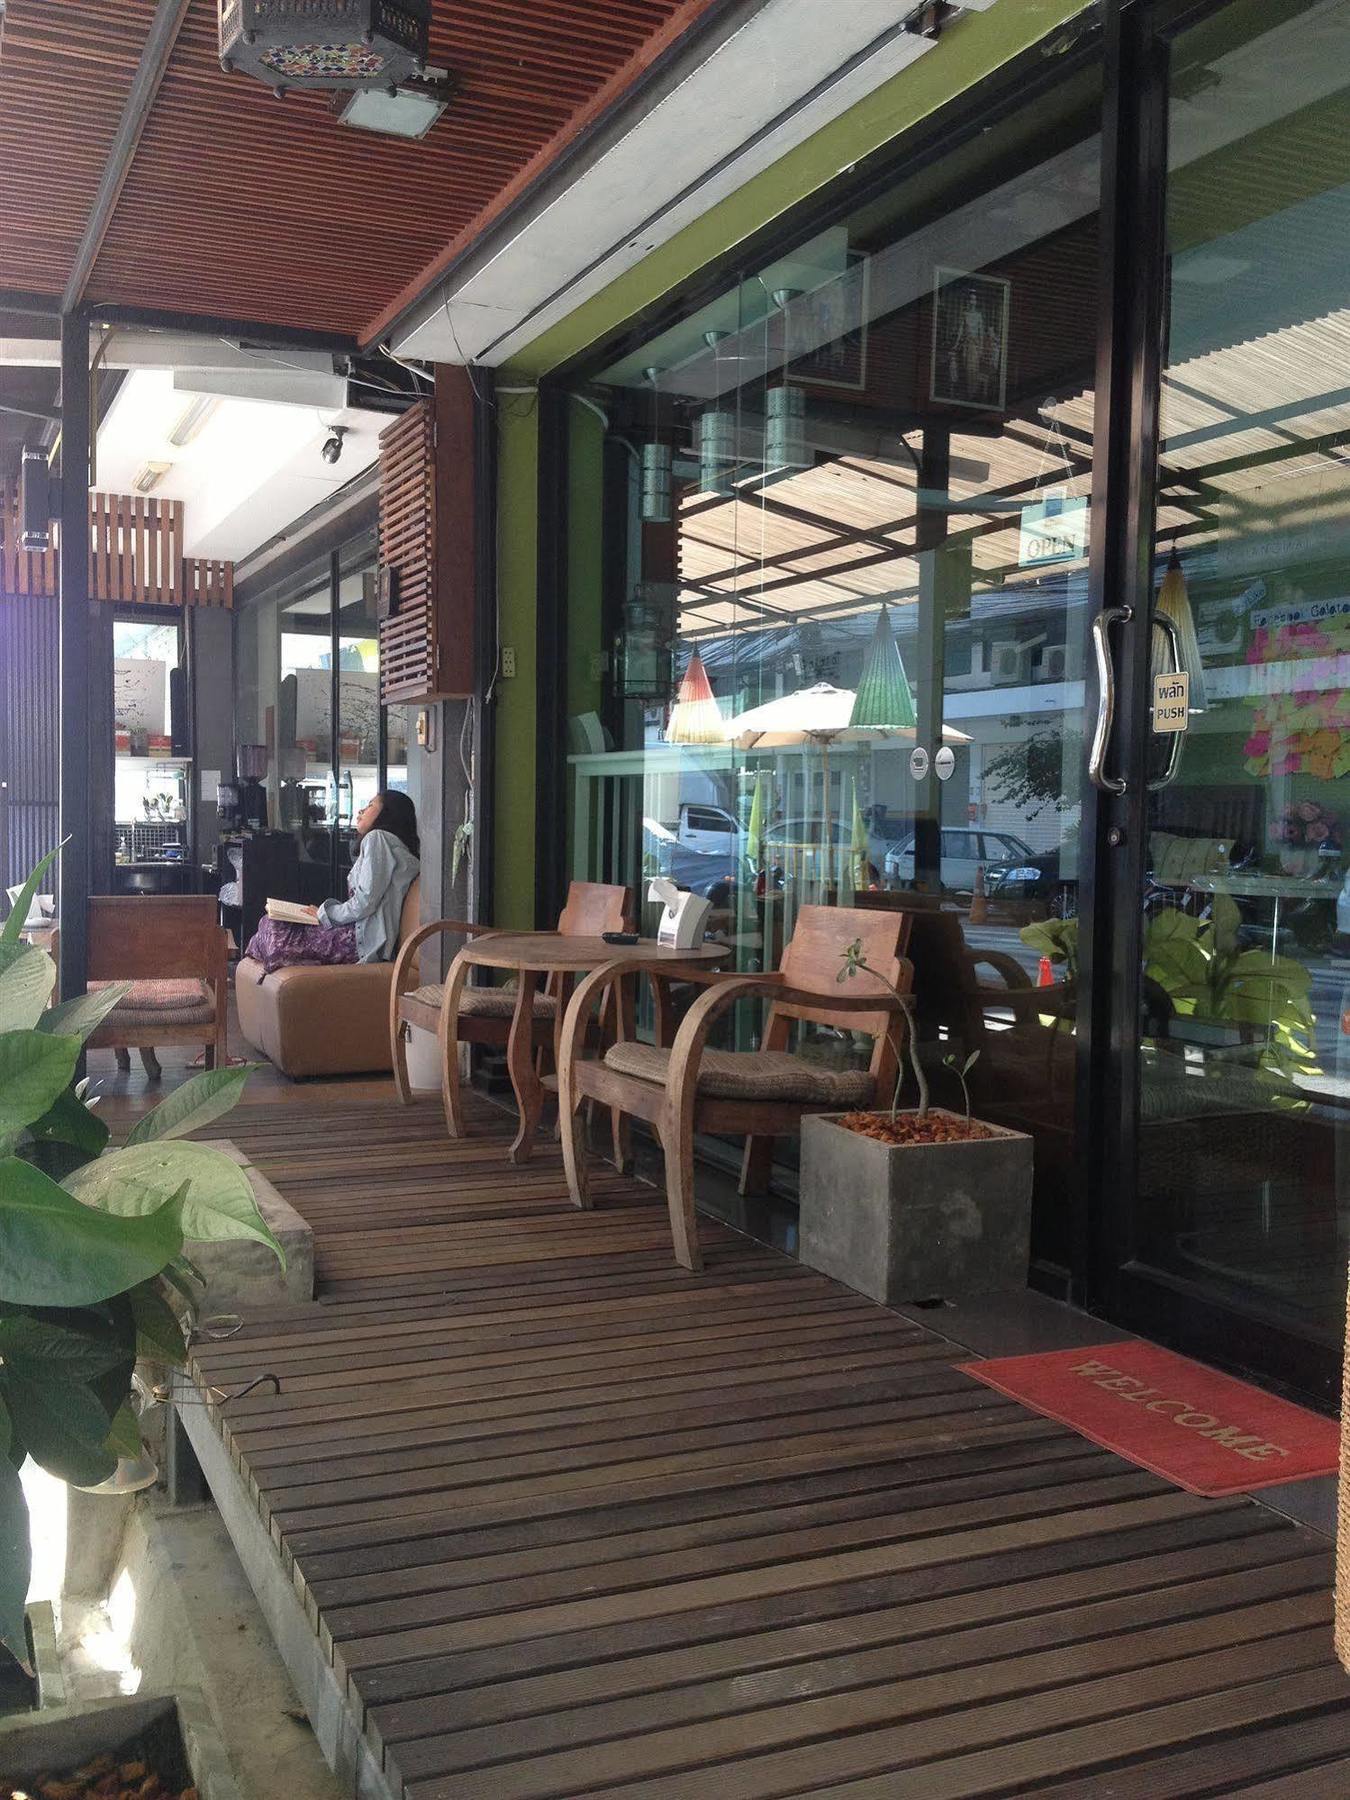 Galato Coffee & Hostel Chiang Mai Exterior photo